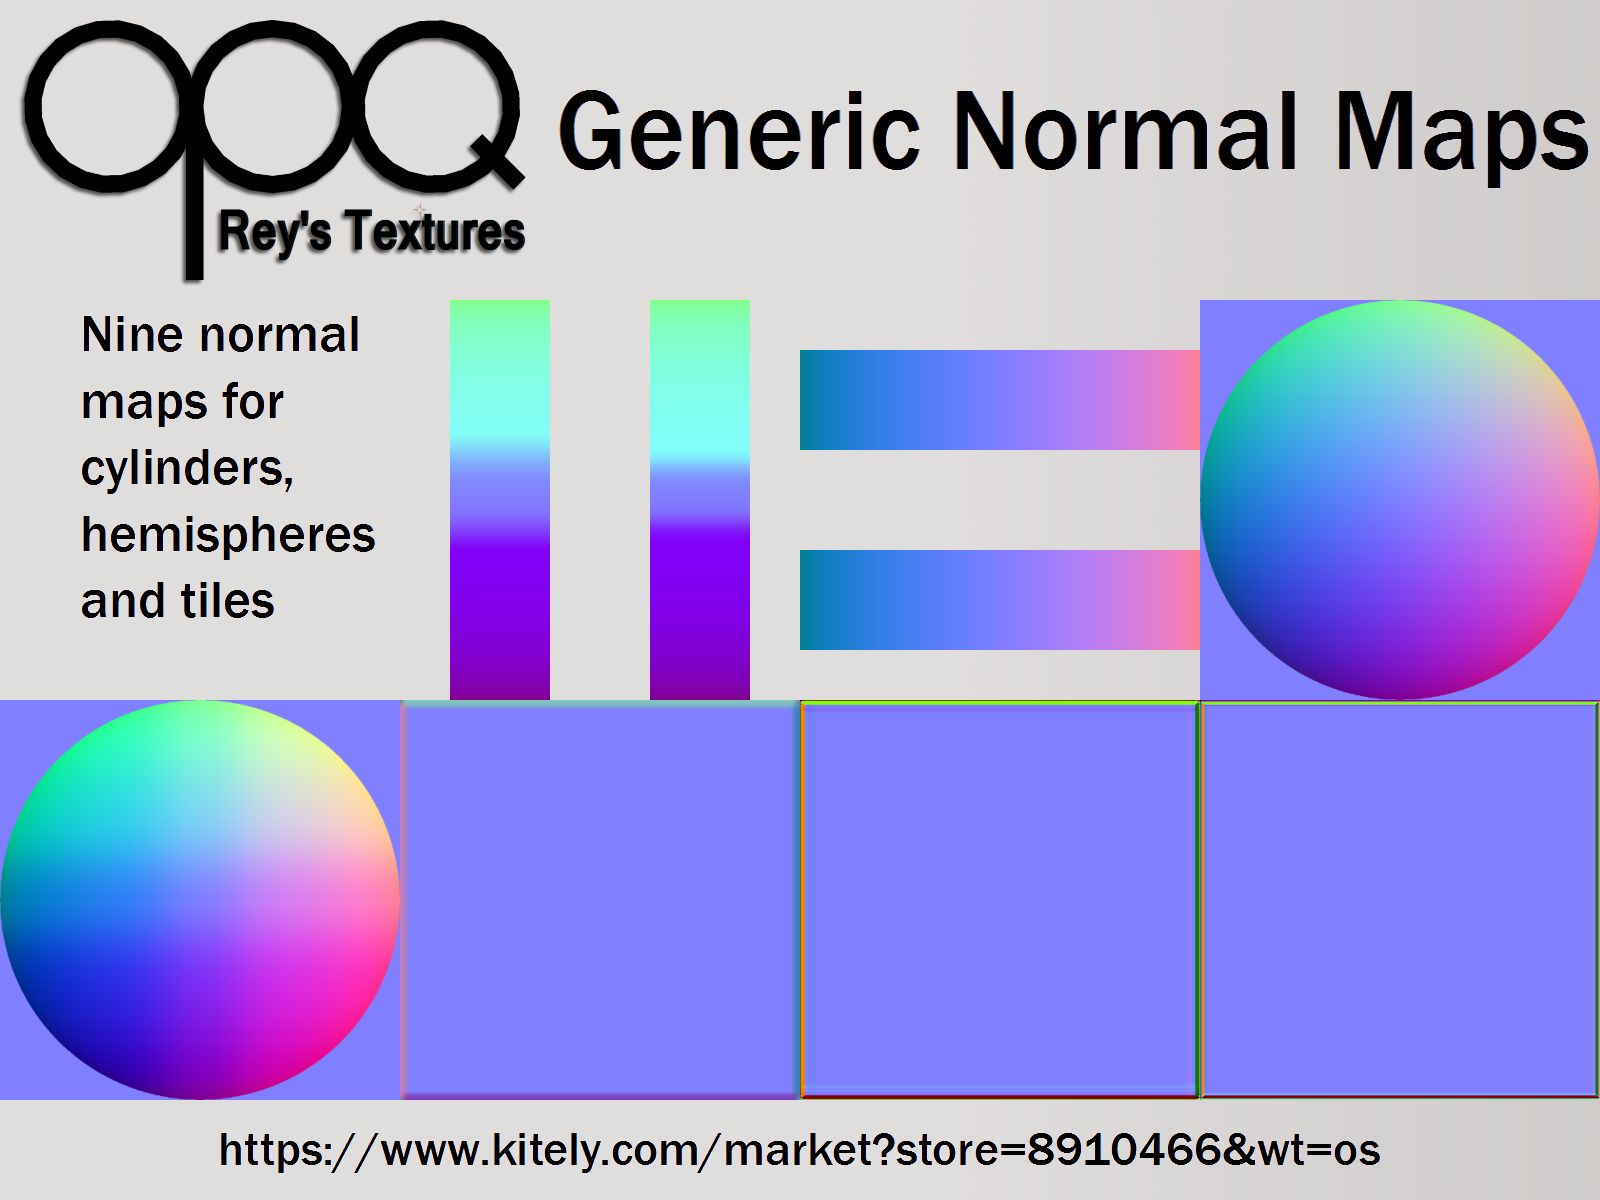 Rey's Generic Normal Maps Poster Kitely.jpg